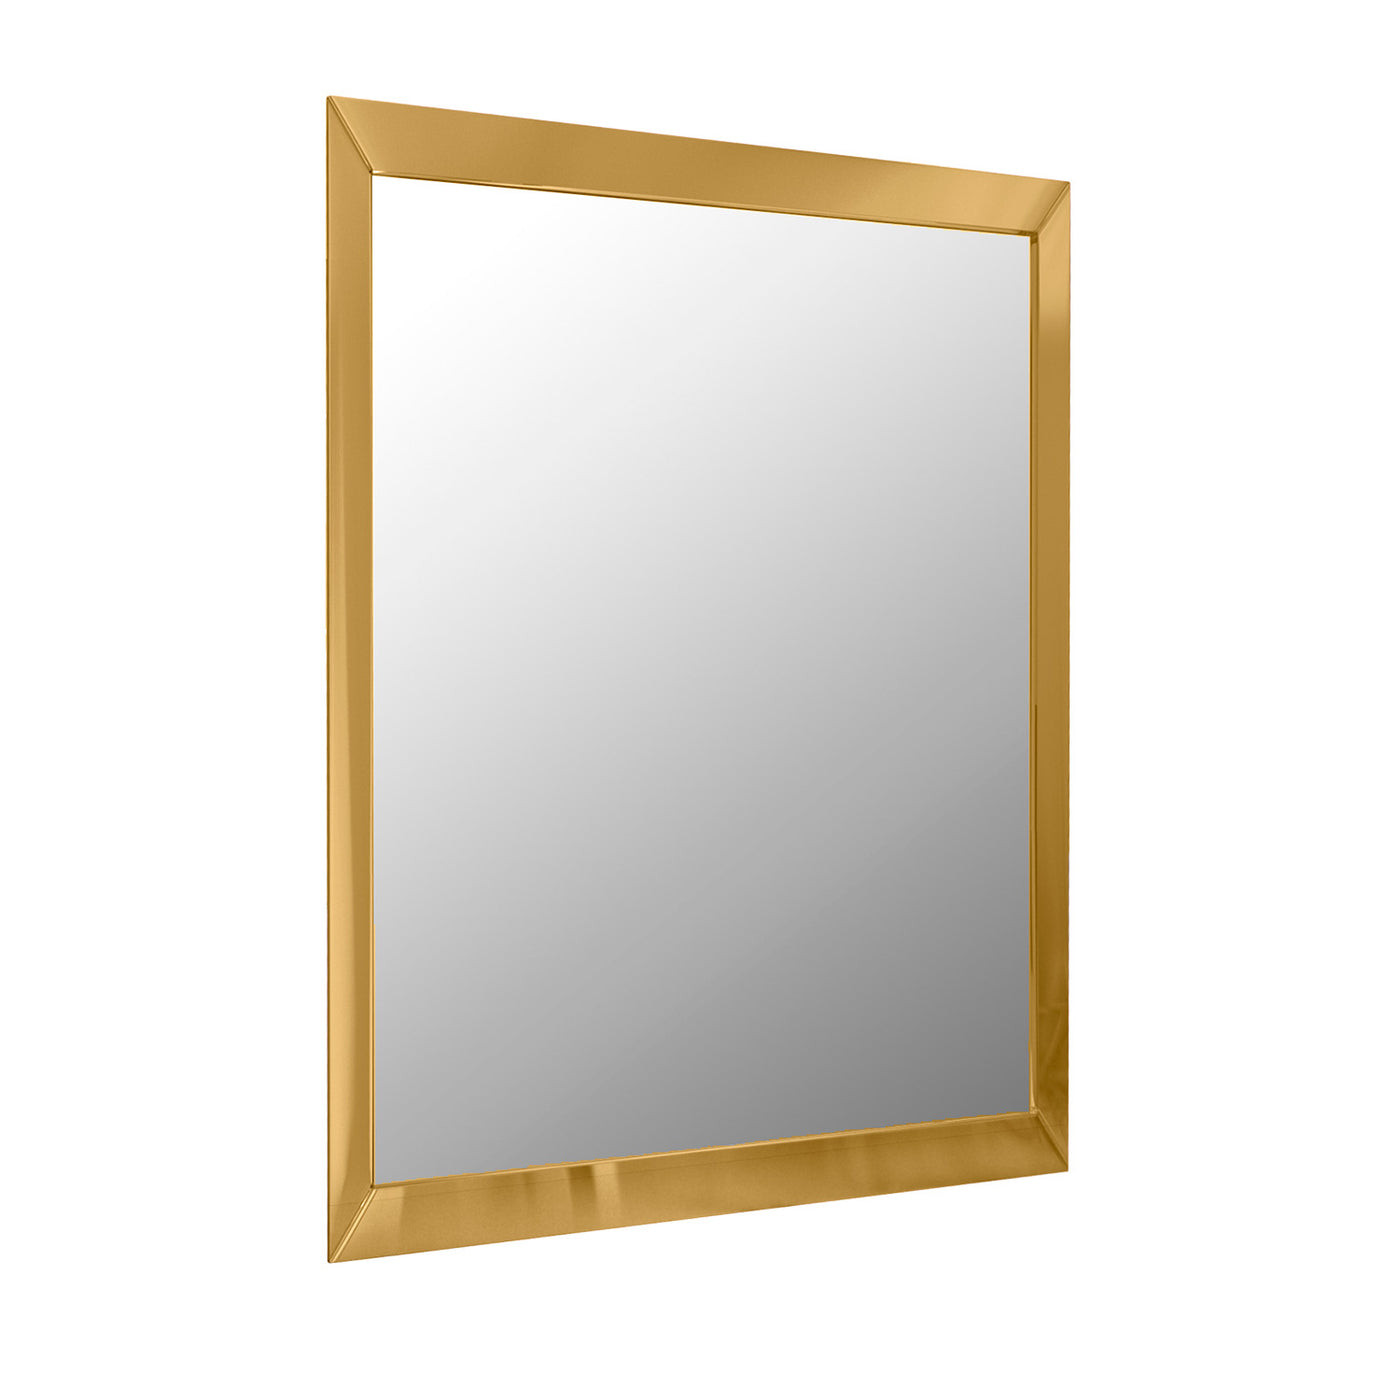 Gold DOBRA-S wall mirror